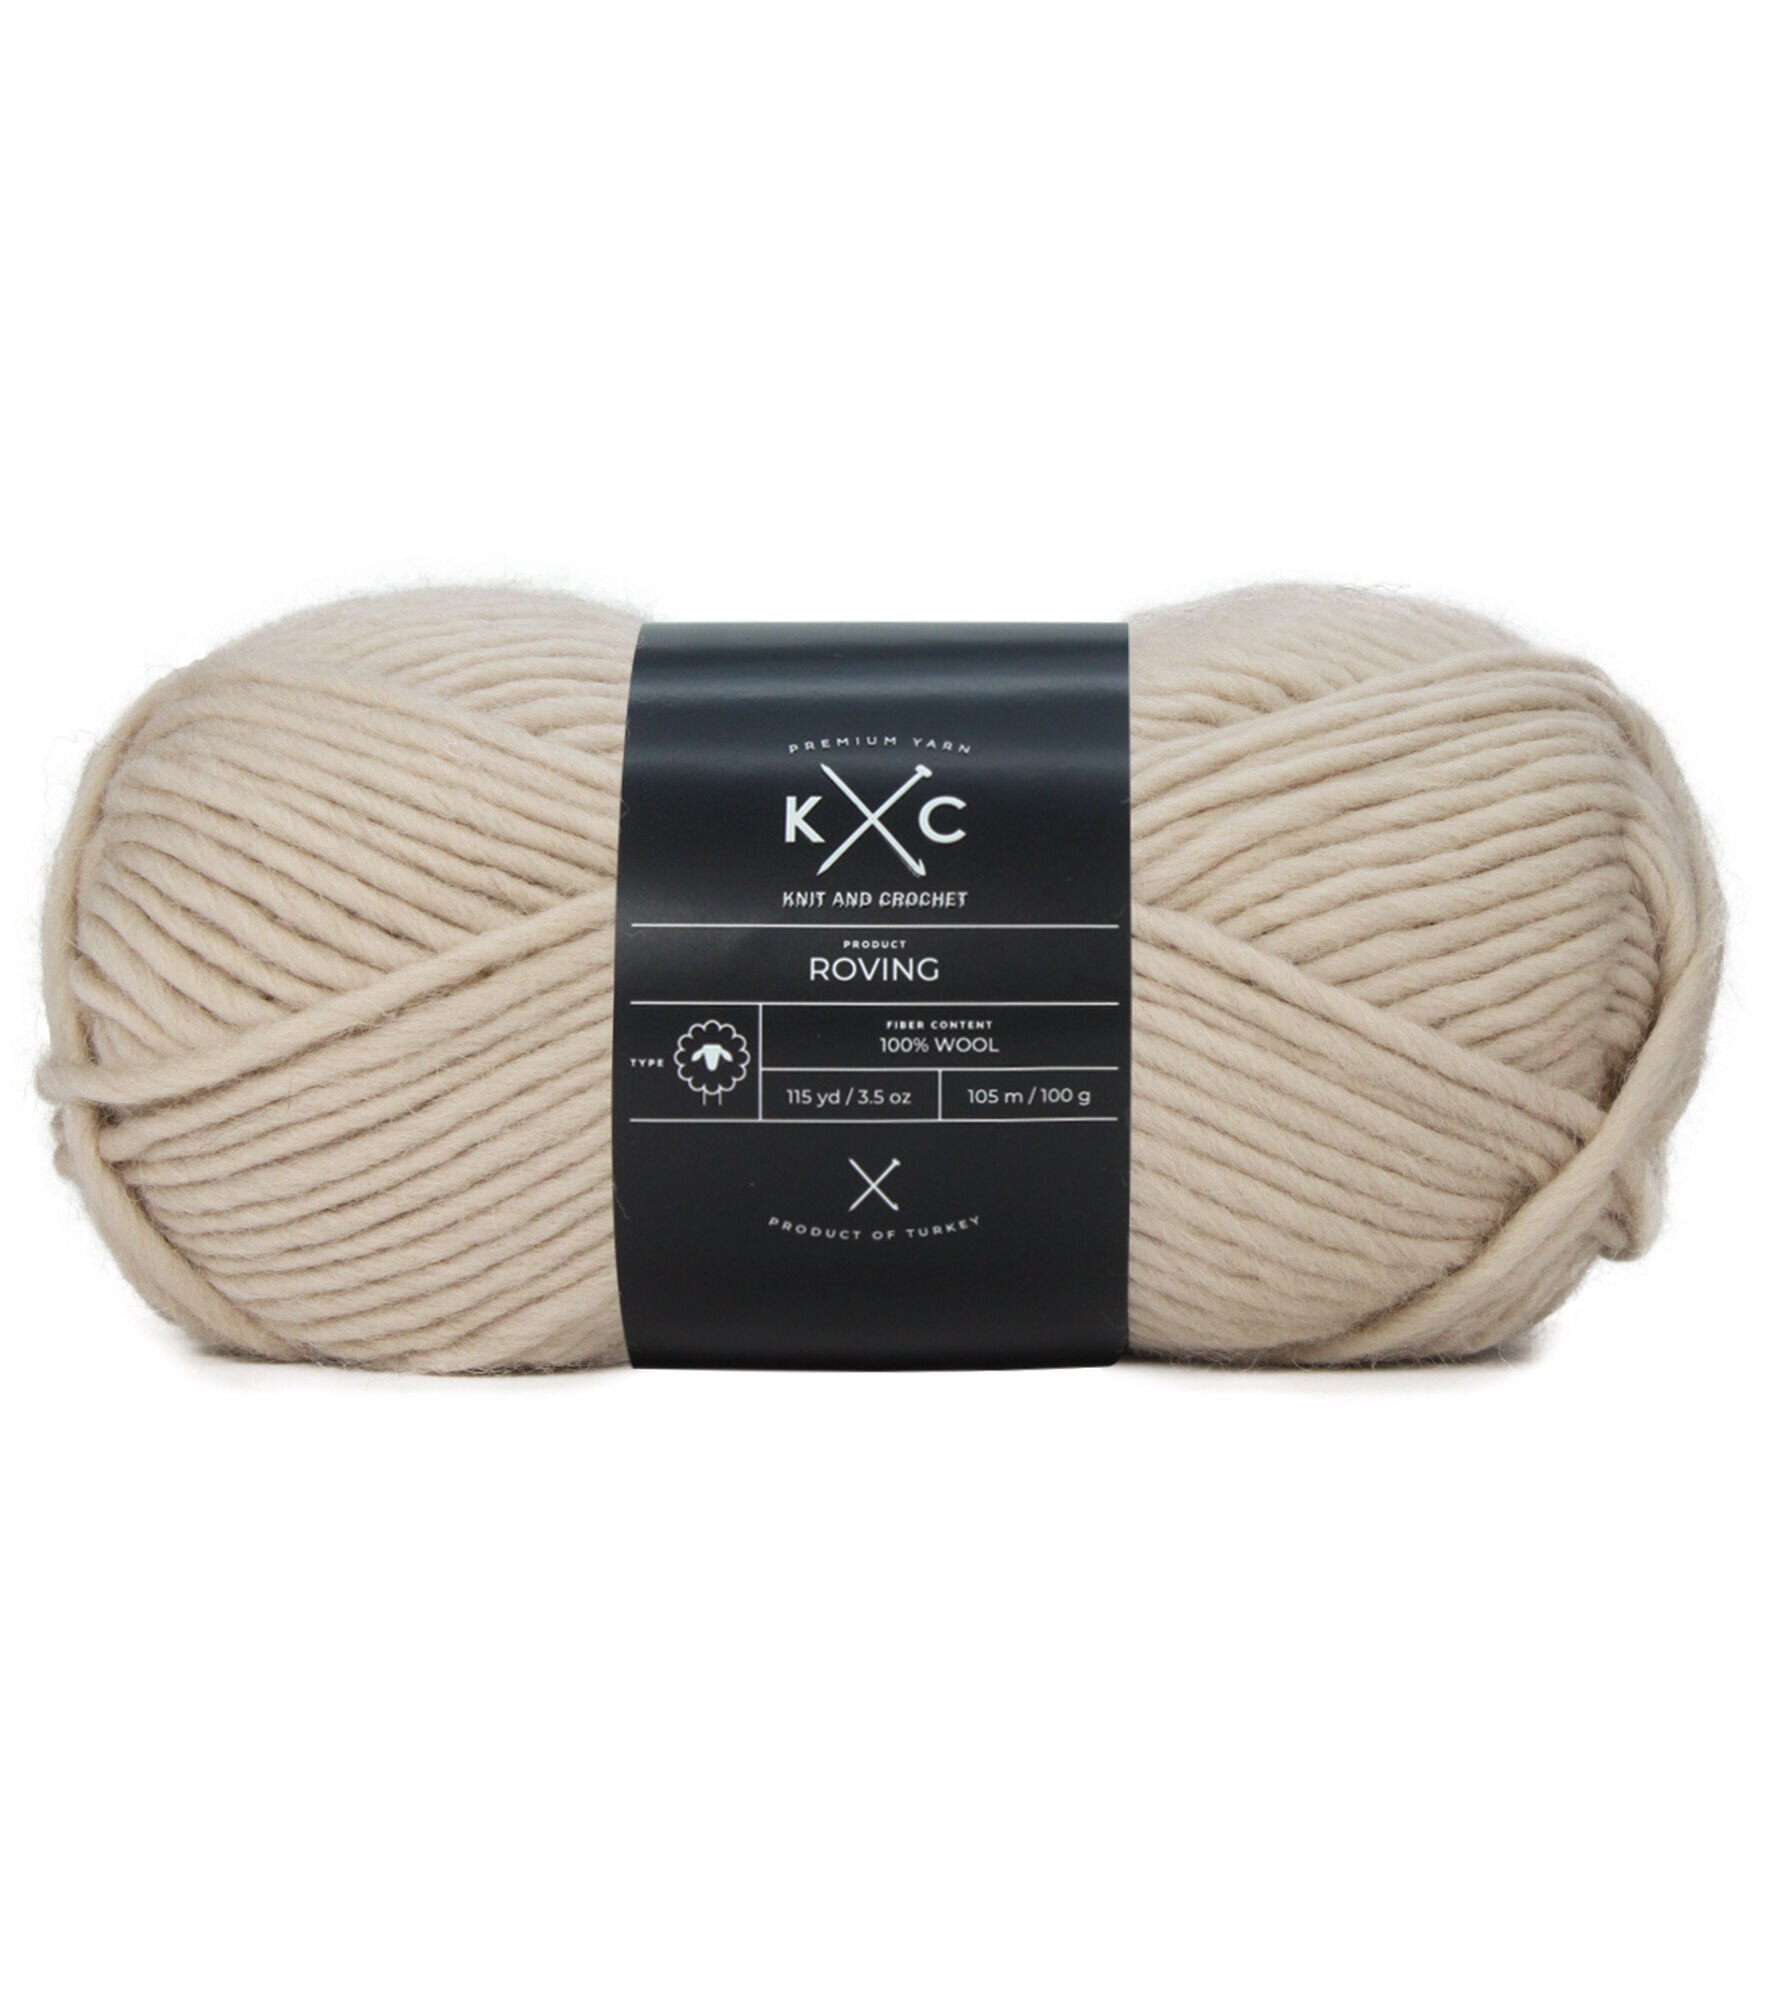 Wool yarn,100% natural, knitting - crochet - craft supplies, lemon